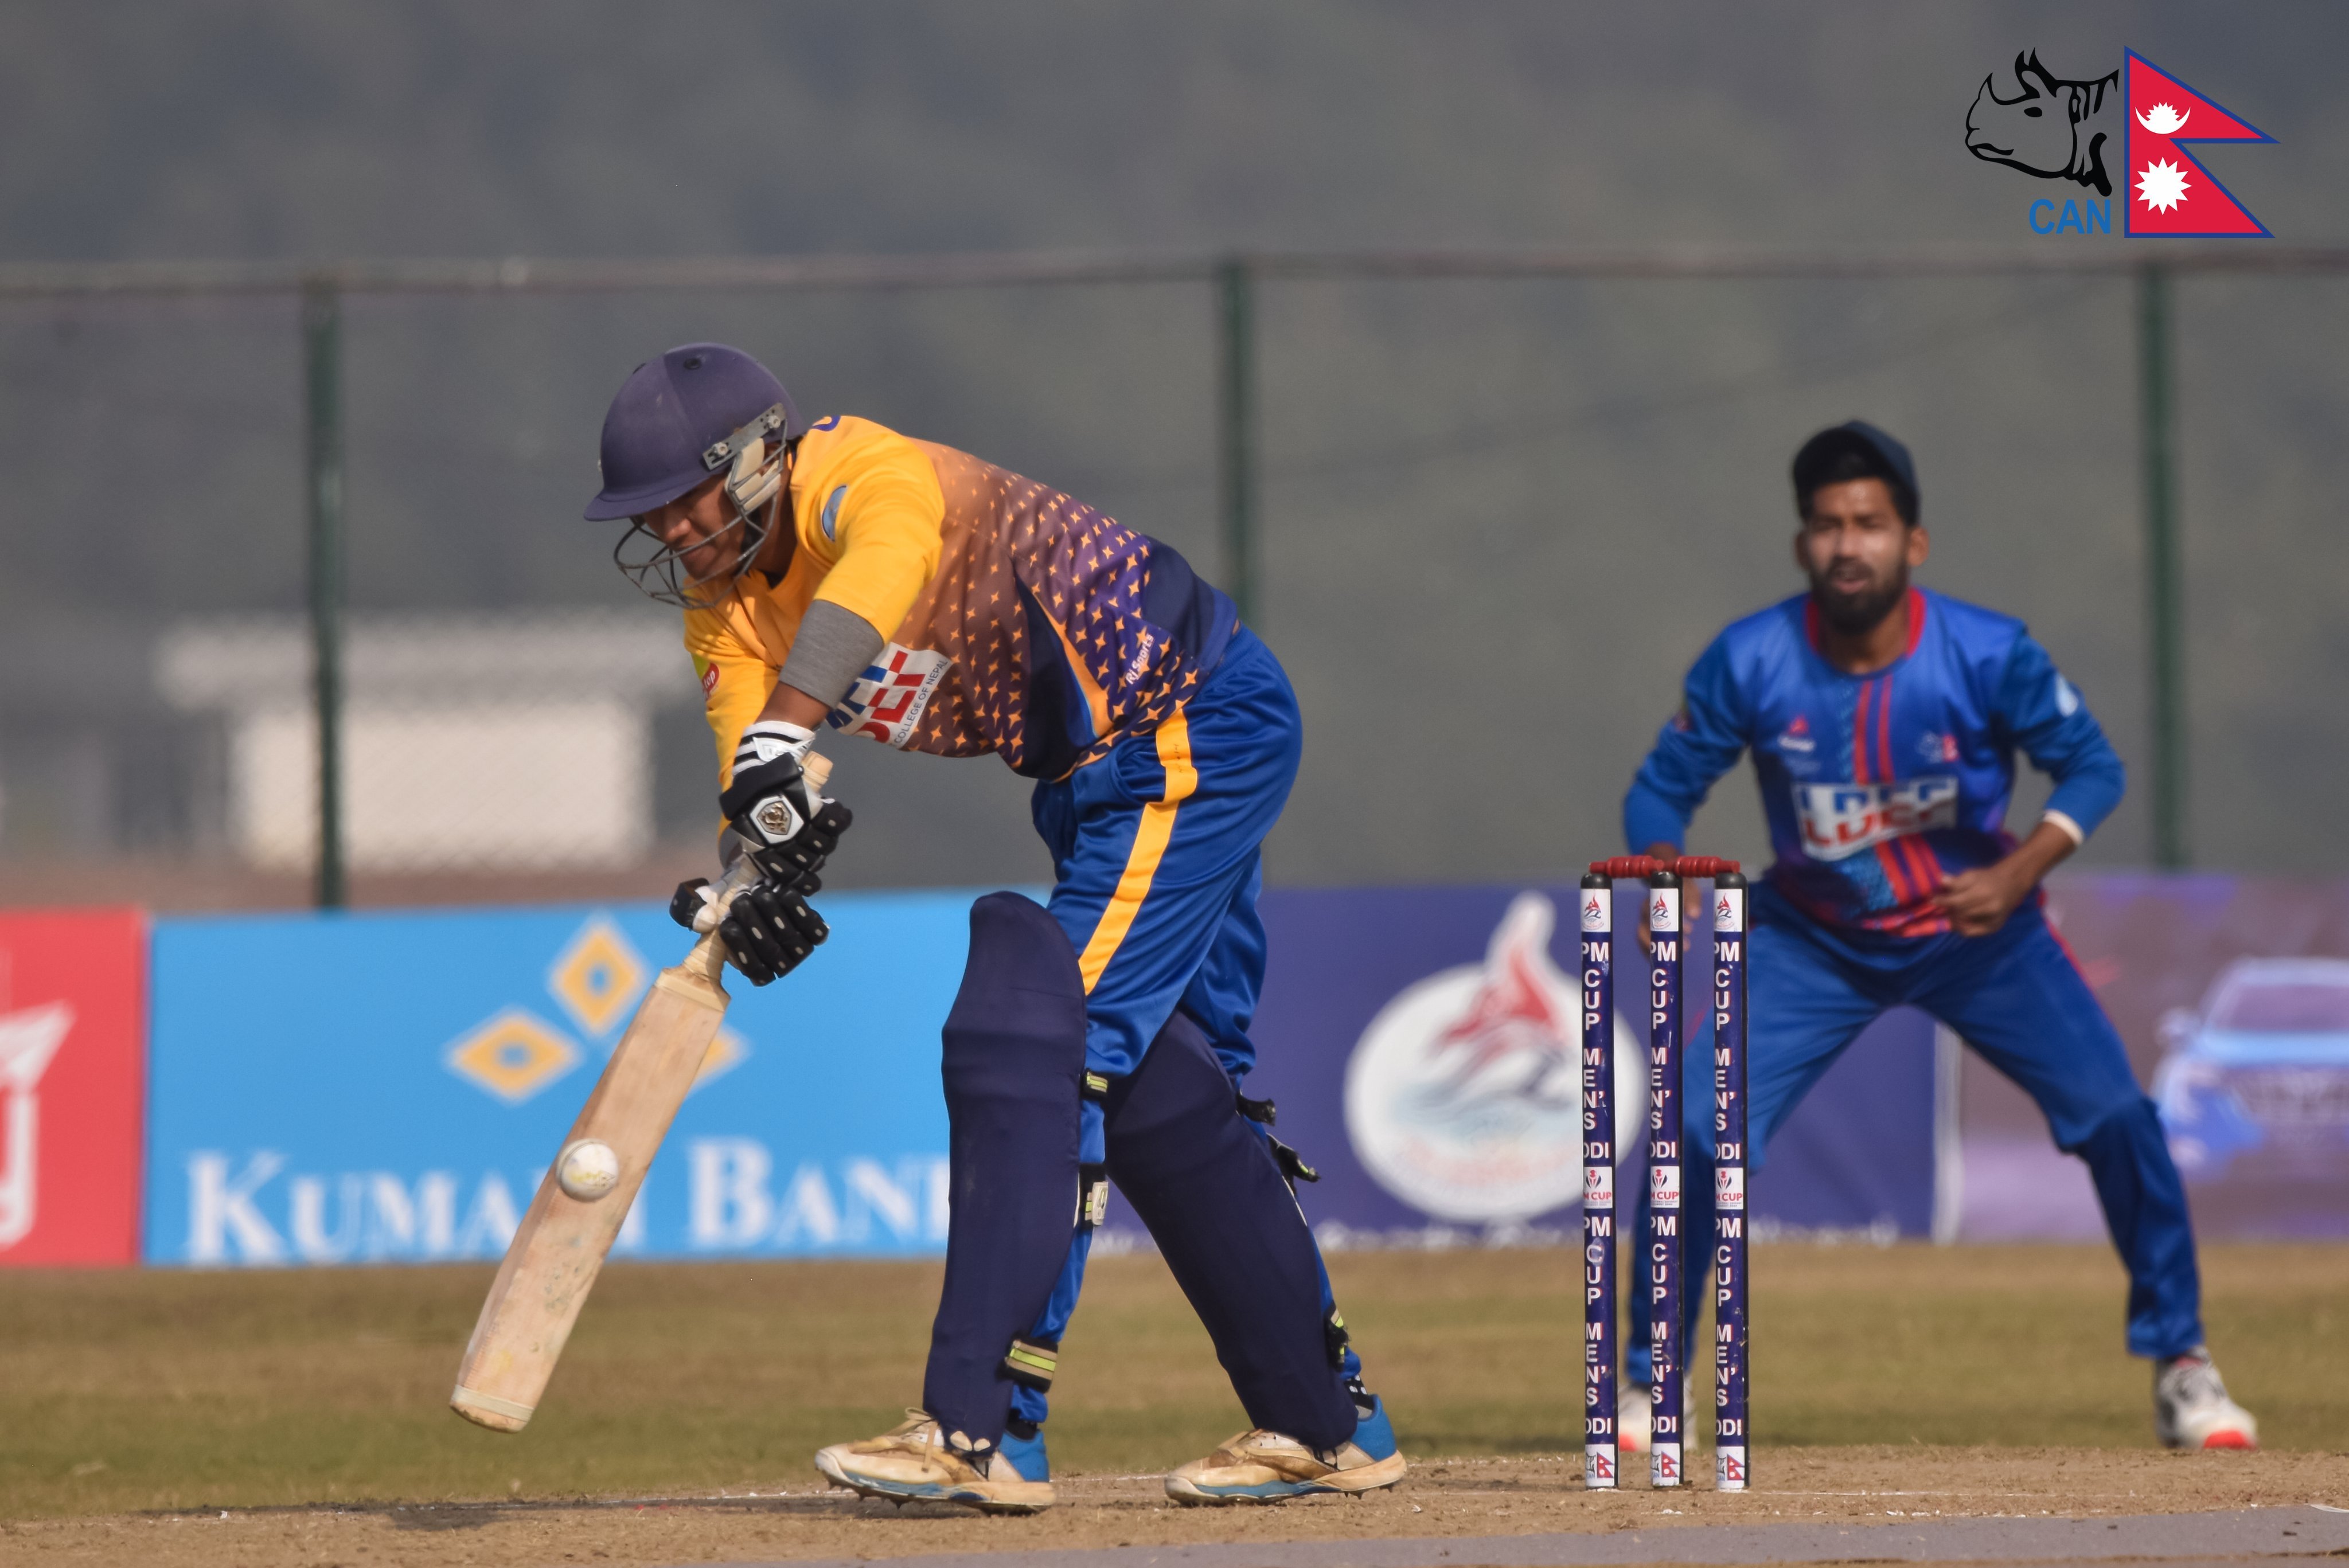 Gandaki Province secures convincing win as Koshi Province falters in PM Cup showdown